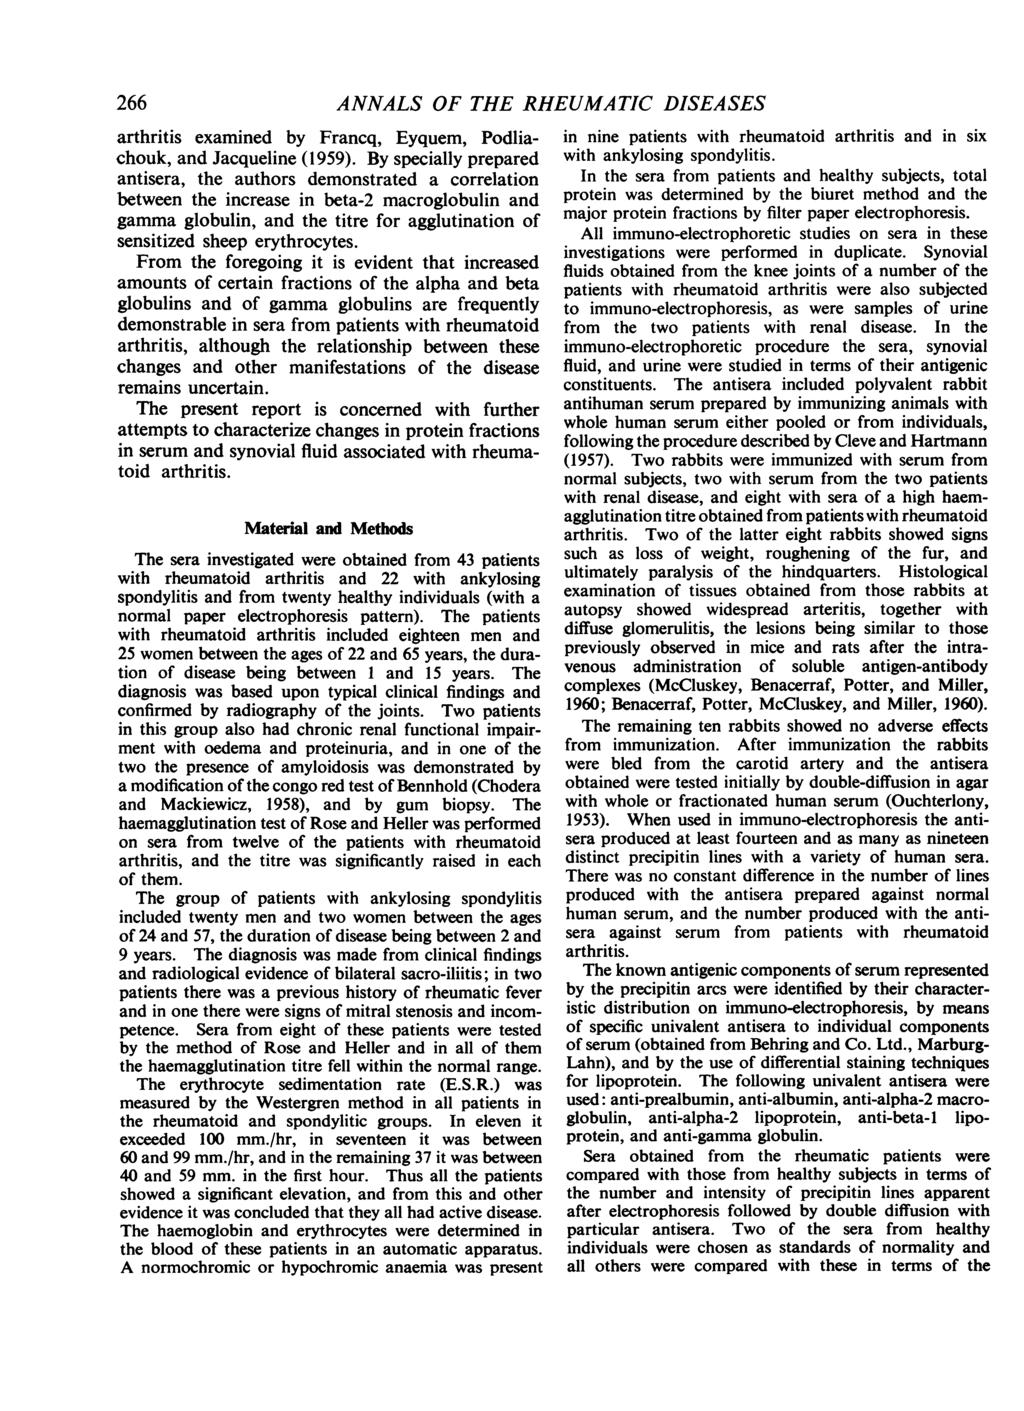 266 arthritis examined by Francq, Eyquem, Podliachouk, and Jacqueline (1959).